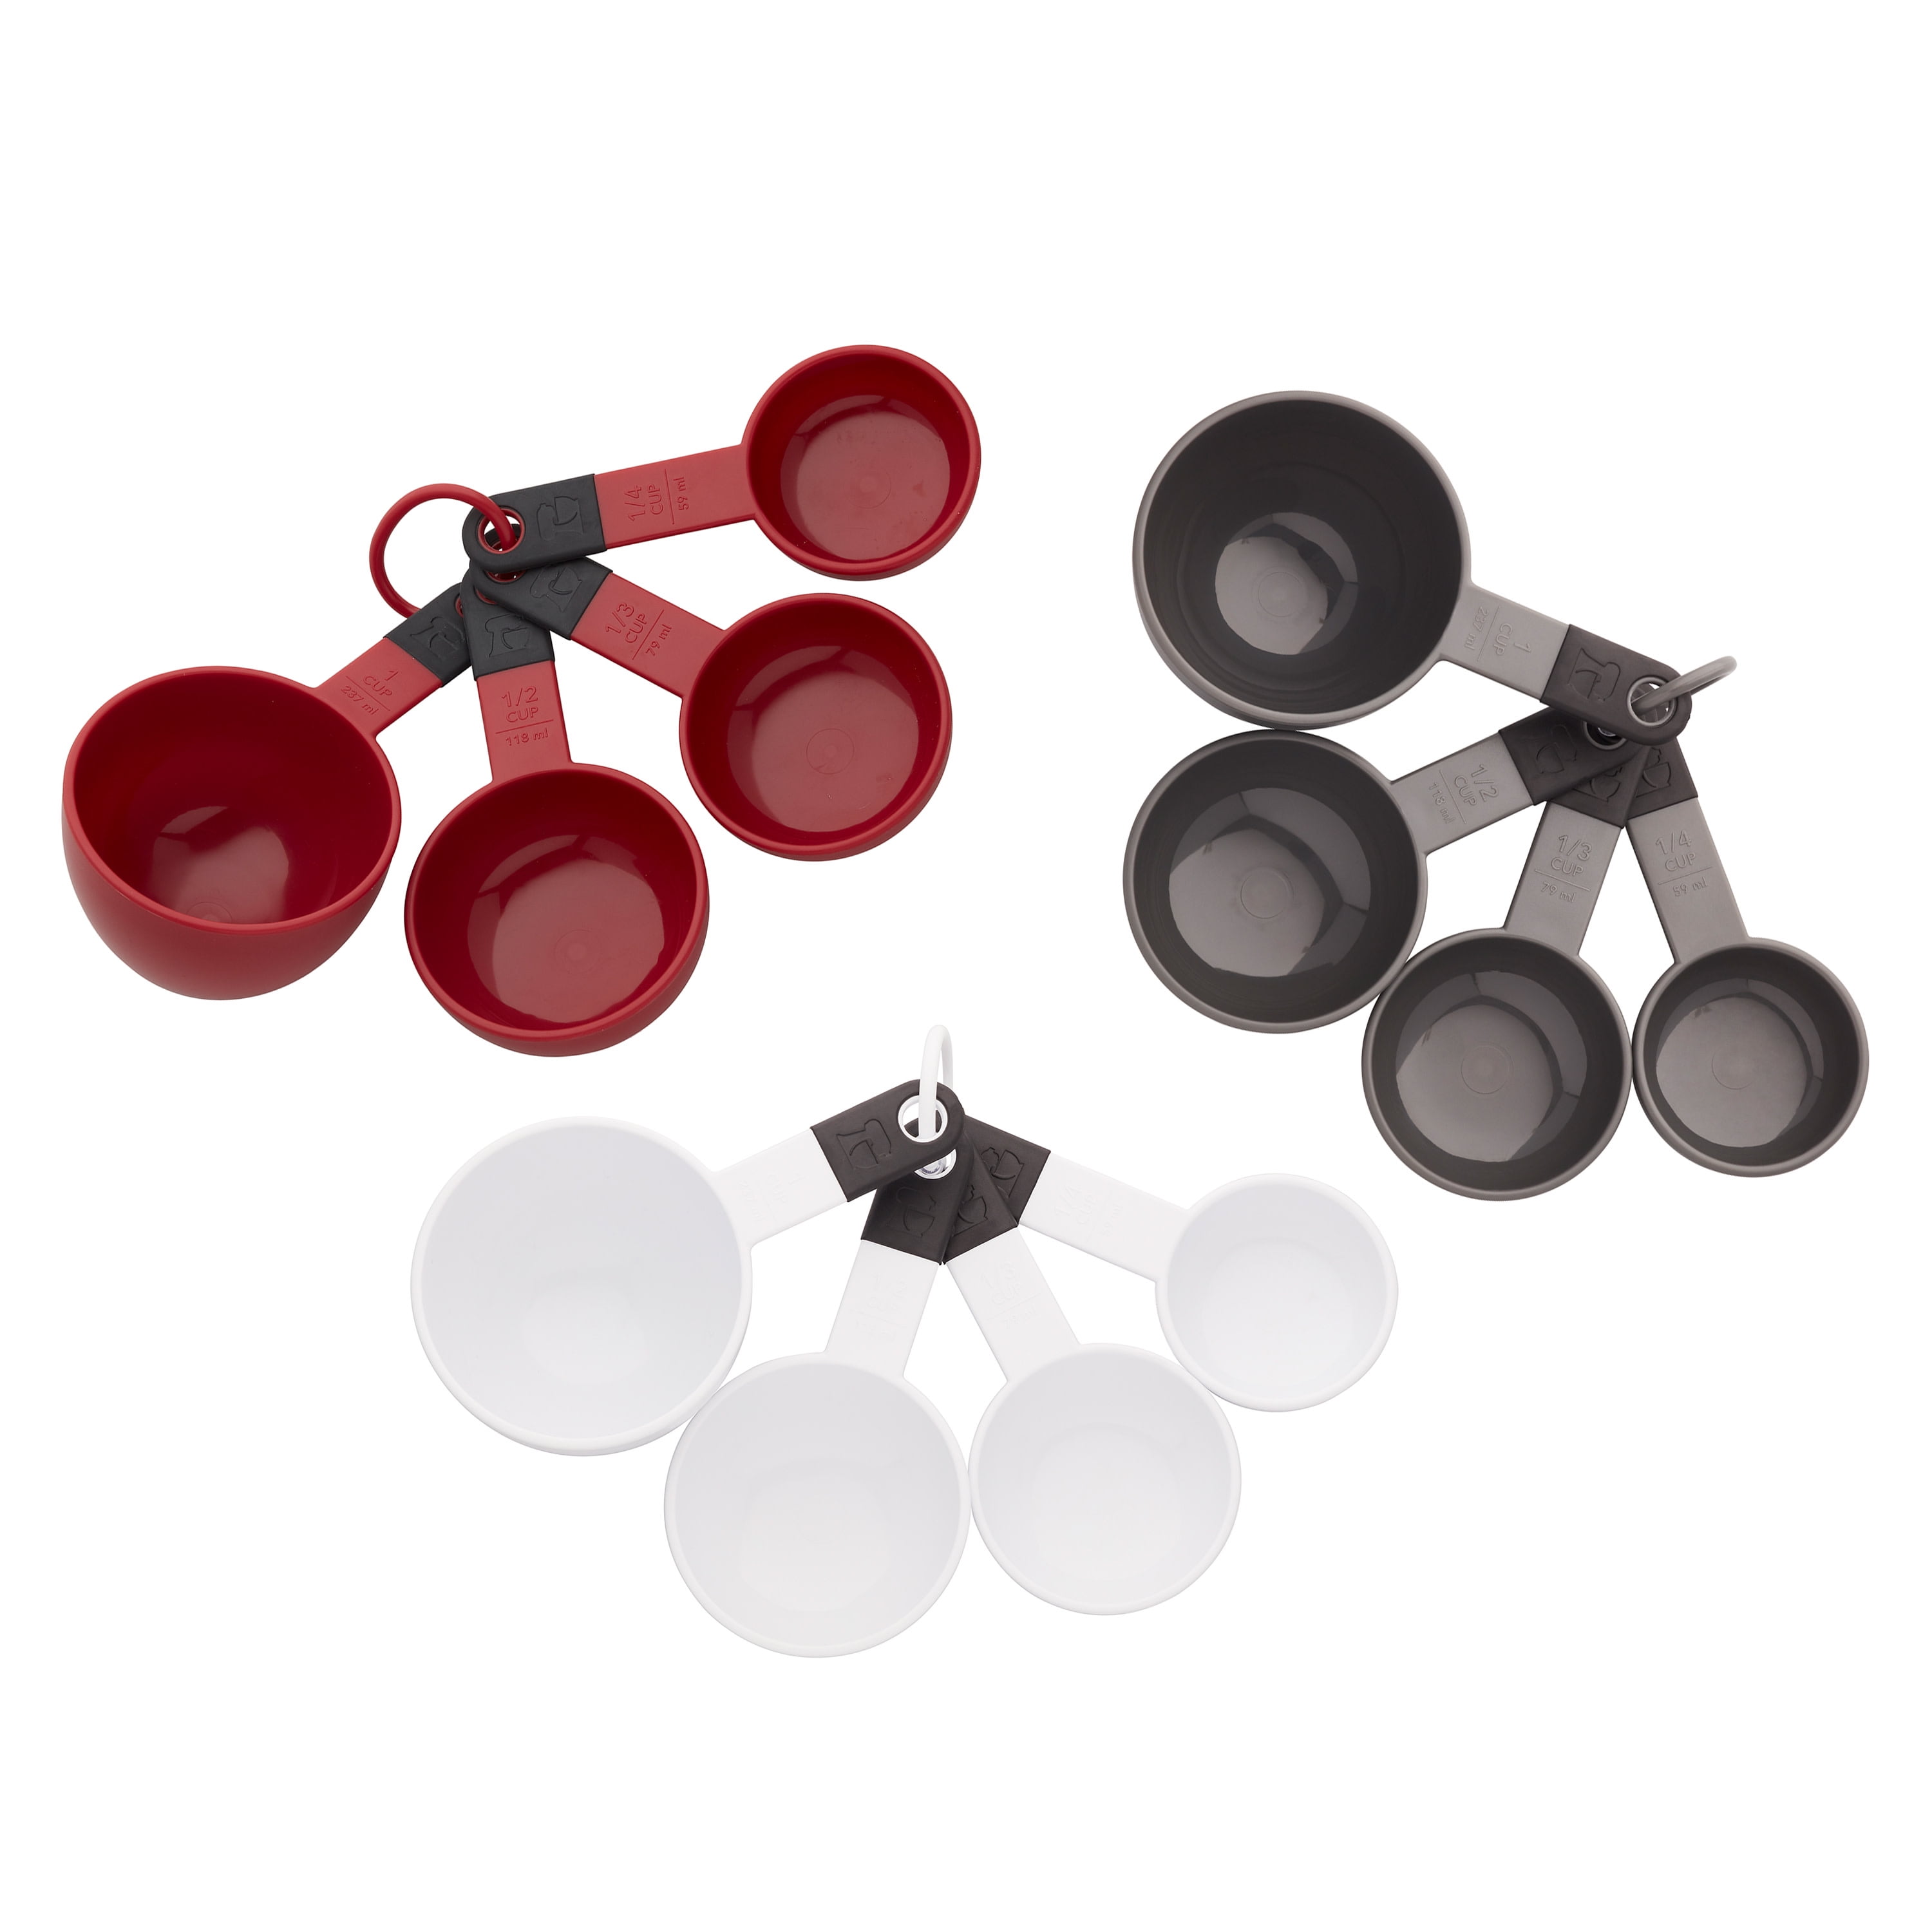 Kitchenaid Set of 4 Dishwasher Safe Plastic Measuring-cups in Red 